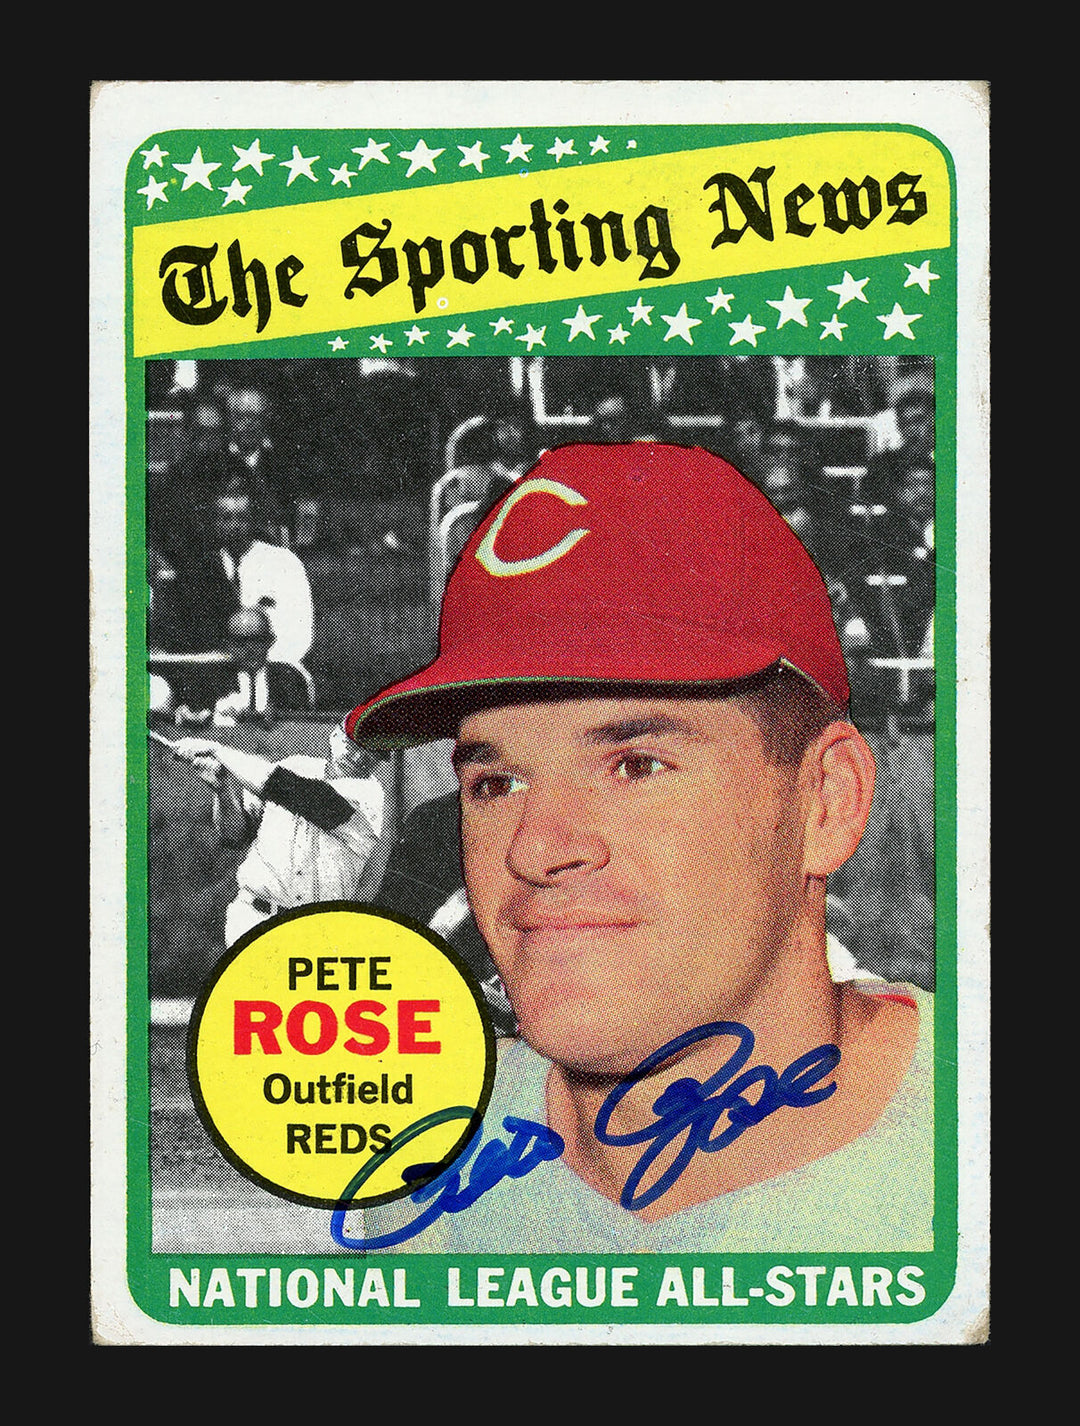 Pete Rose Autographed 1969 Topps All Stars Card #424 Cincinnati Reds SKU #202029 Image 1